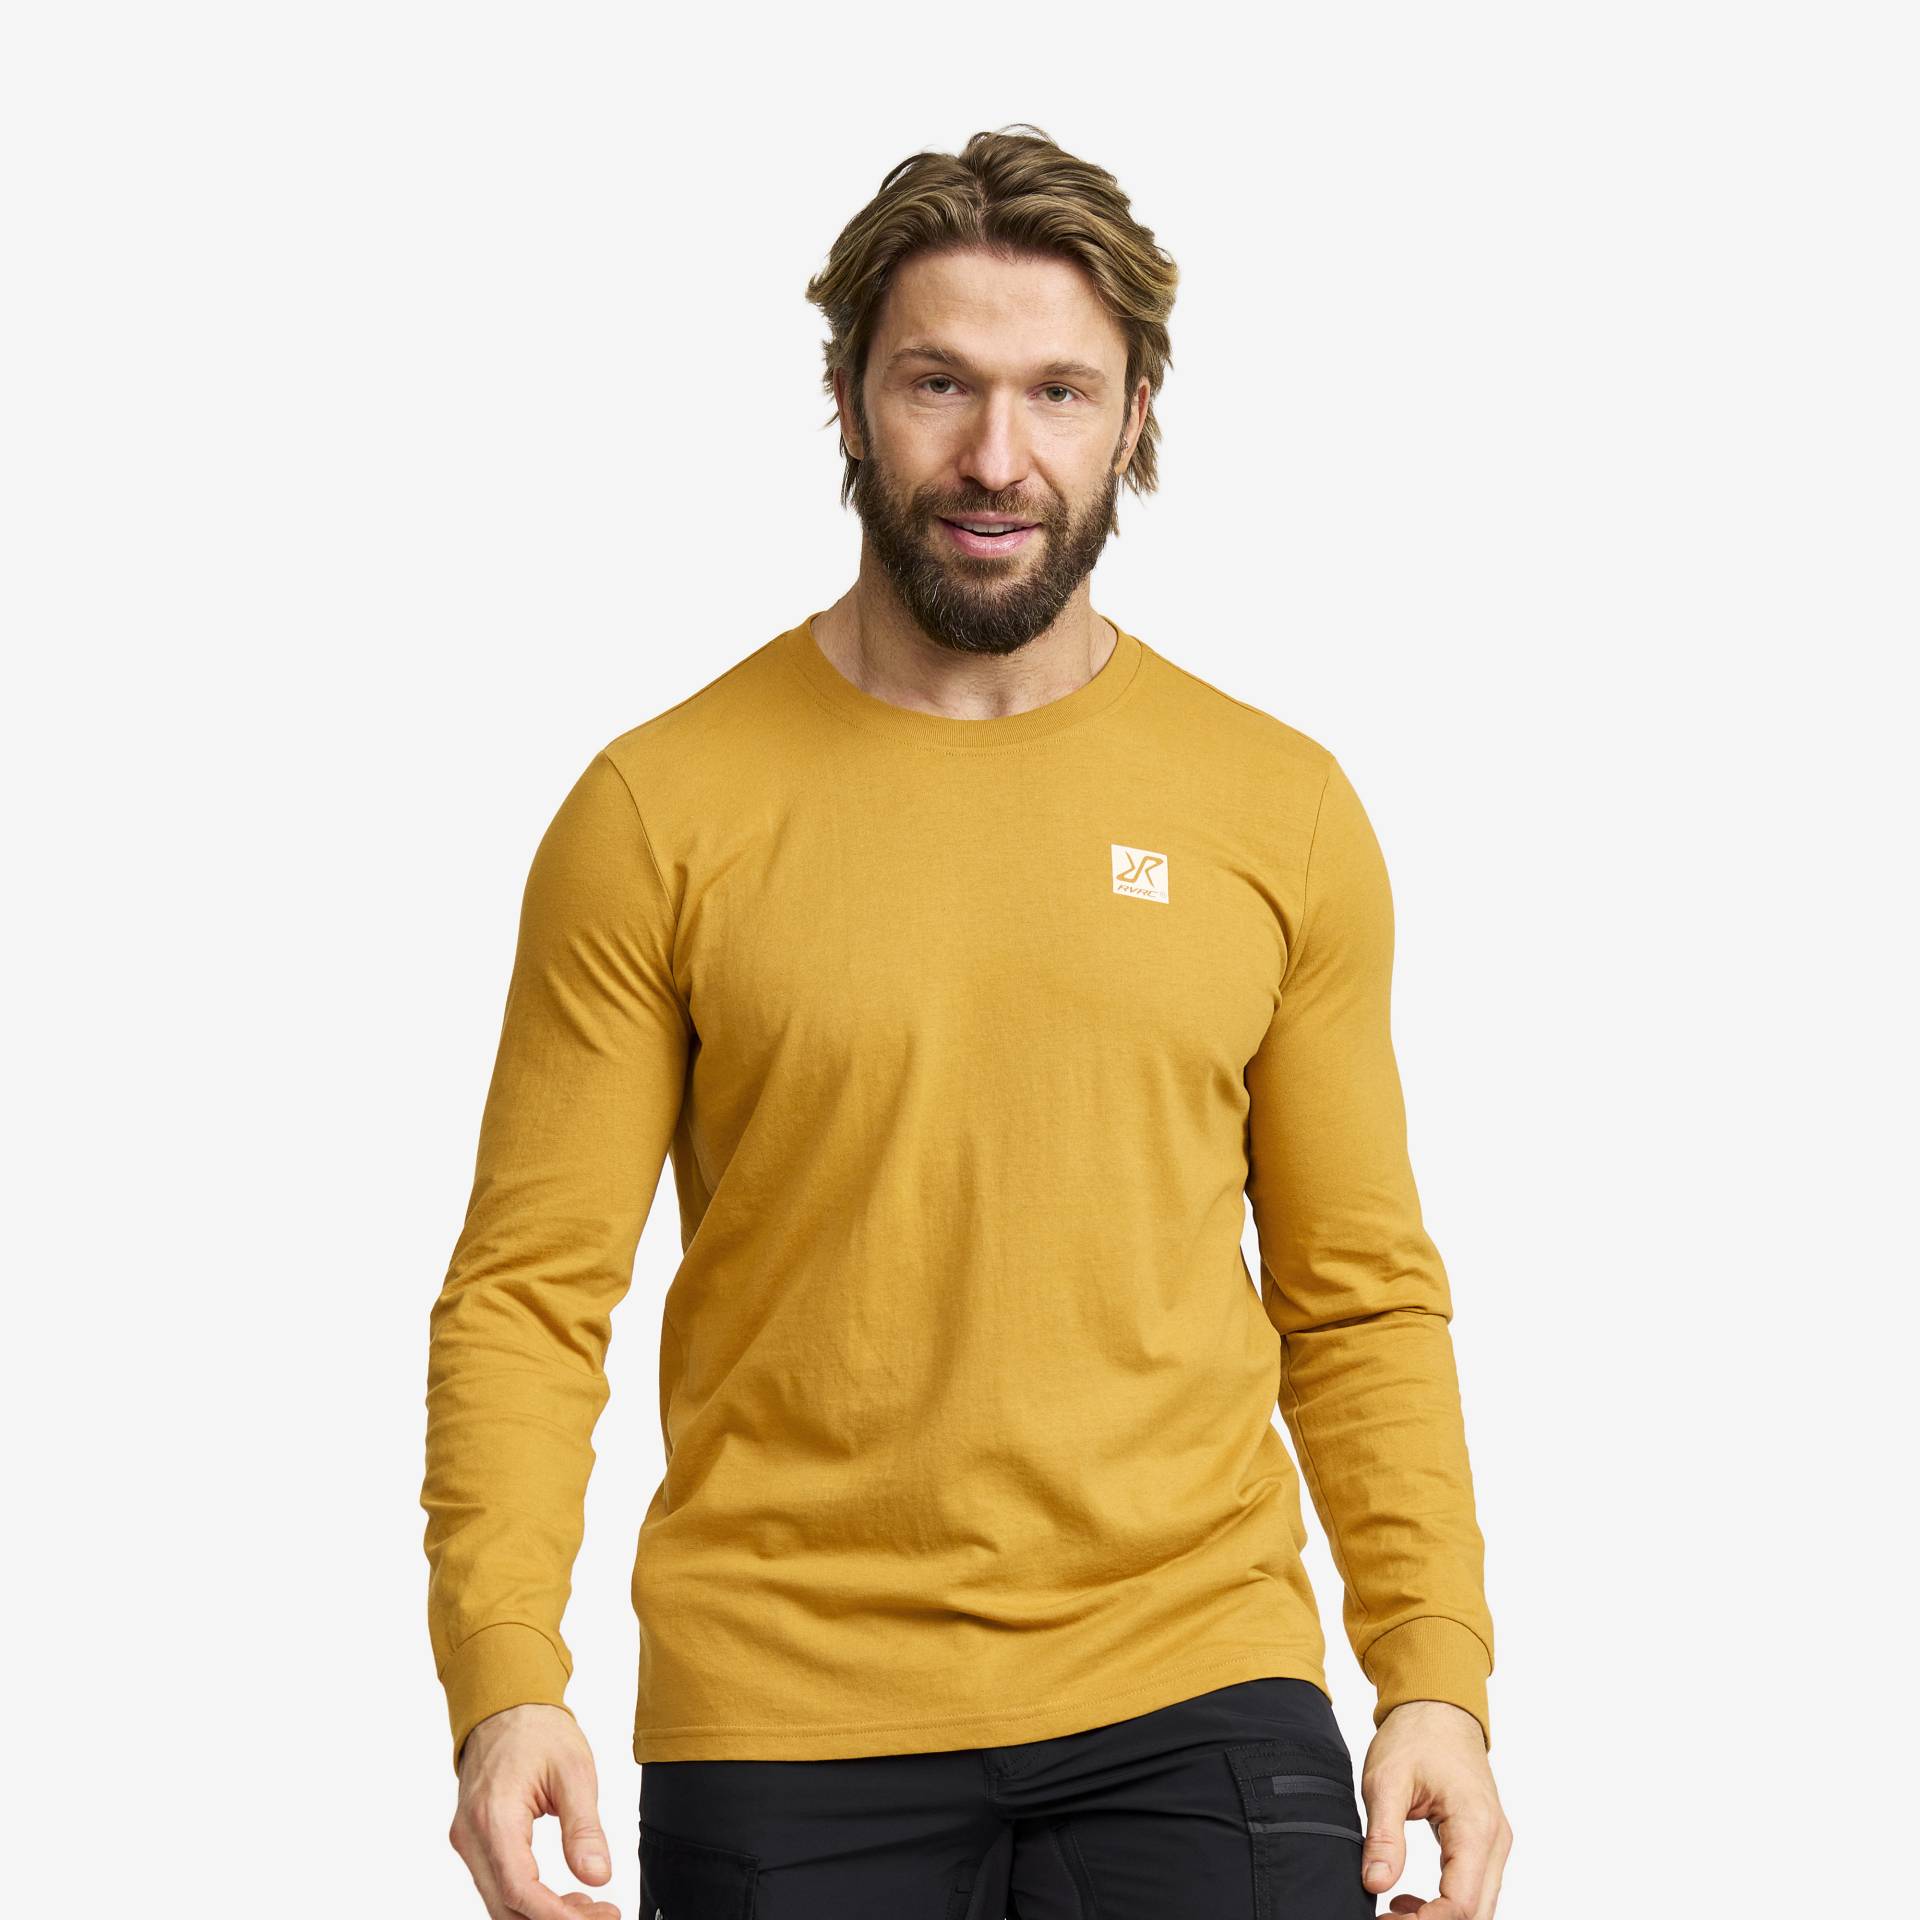 Easy Long-sleeved T-shirt Herren Harvest Gold, Größe:3XL - Bekleidung > Oberteile > Hemden & Langarmshirts von RevolutionRace